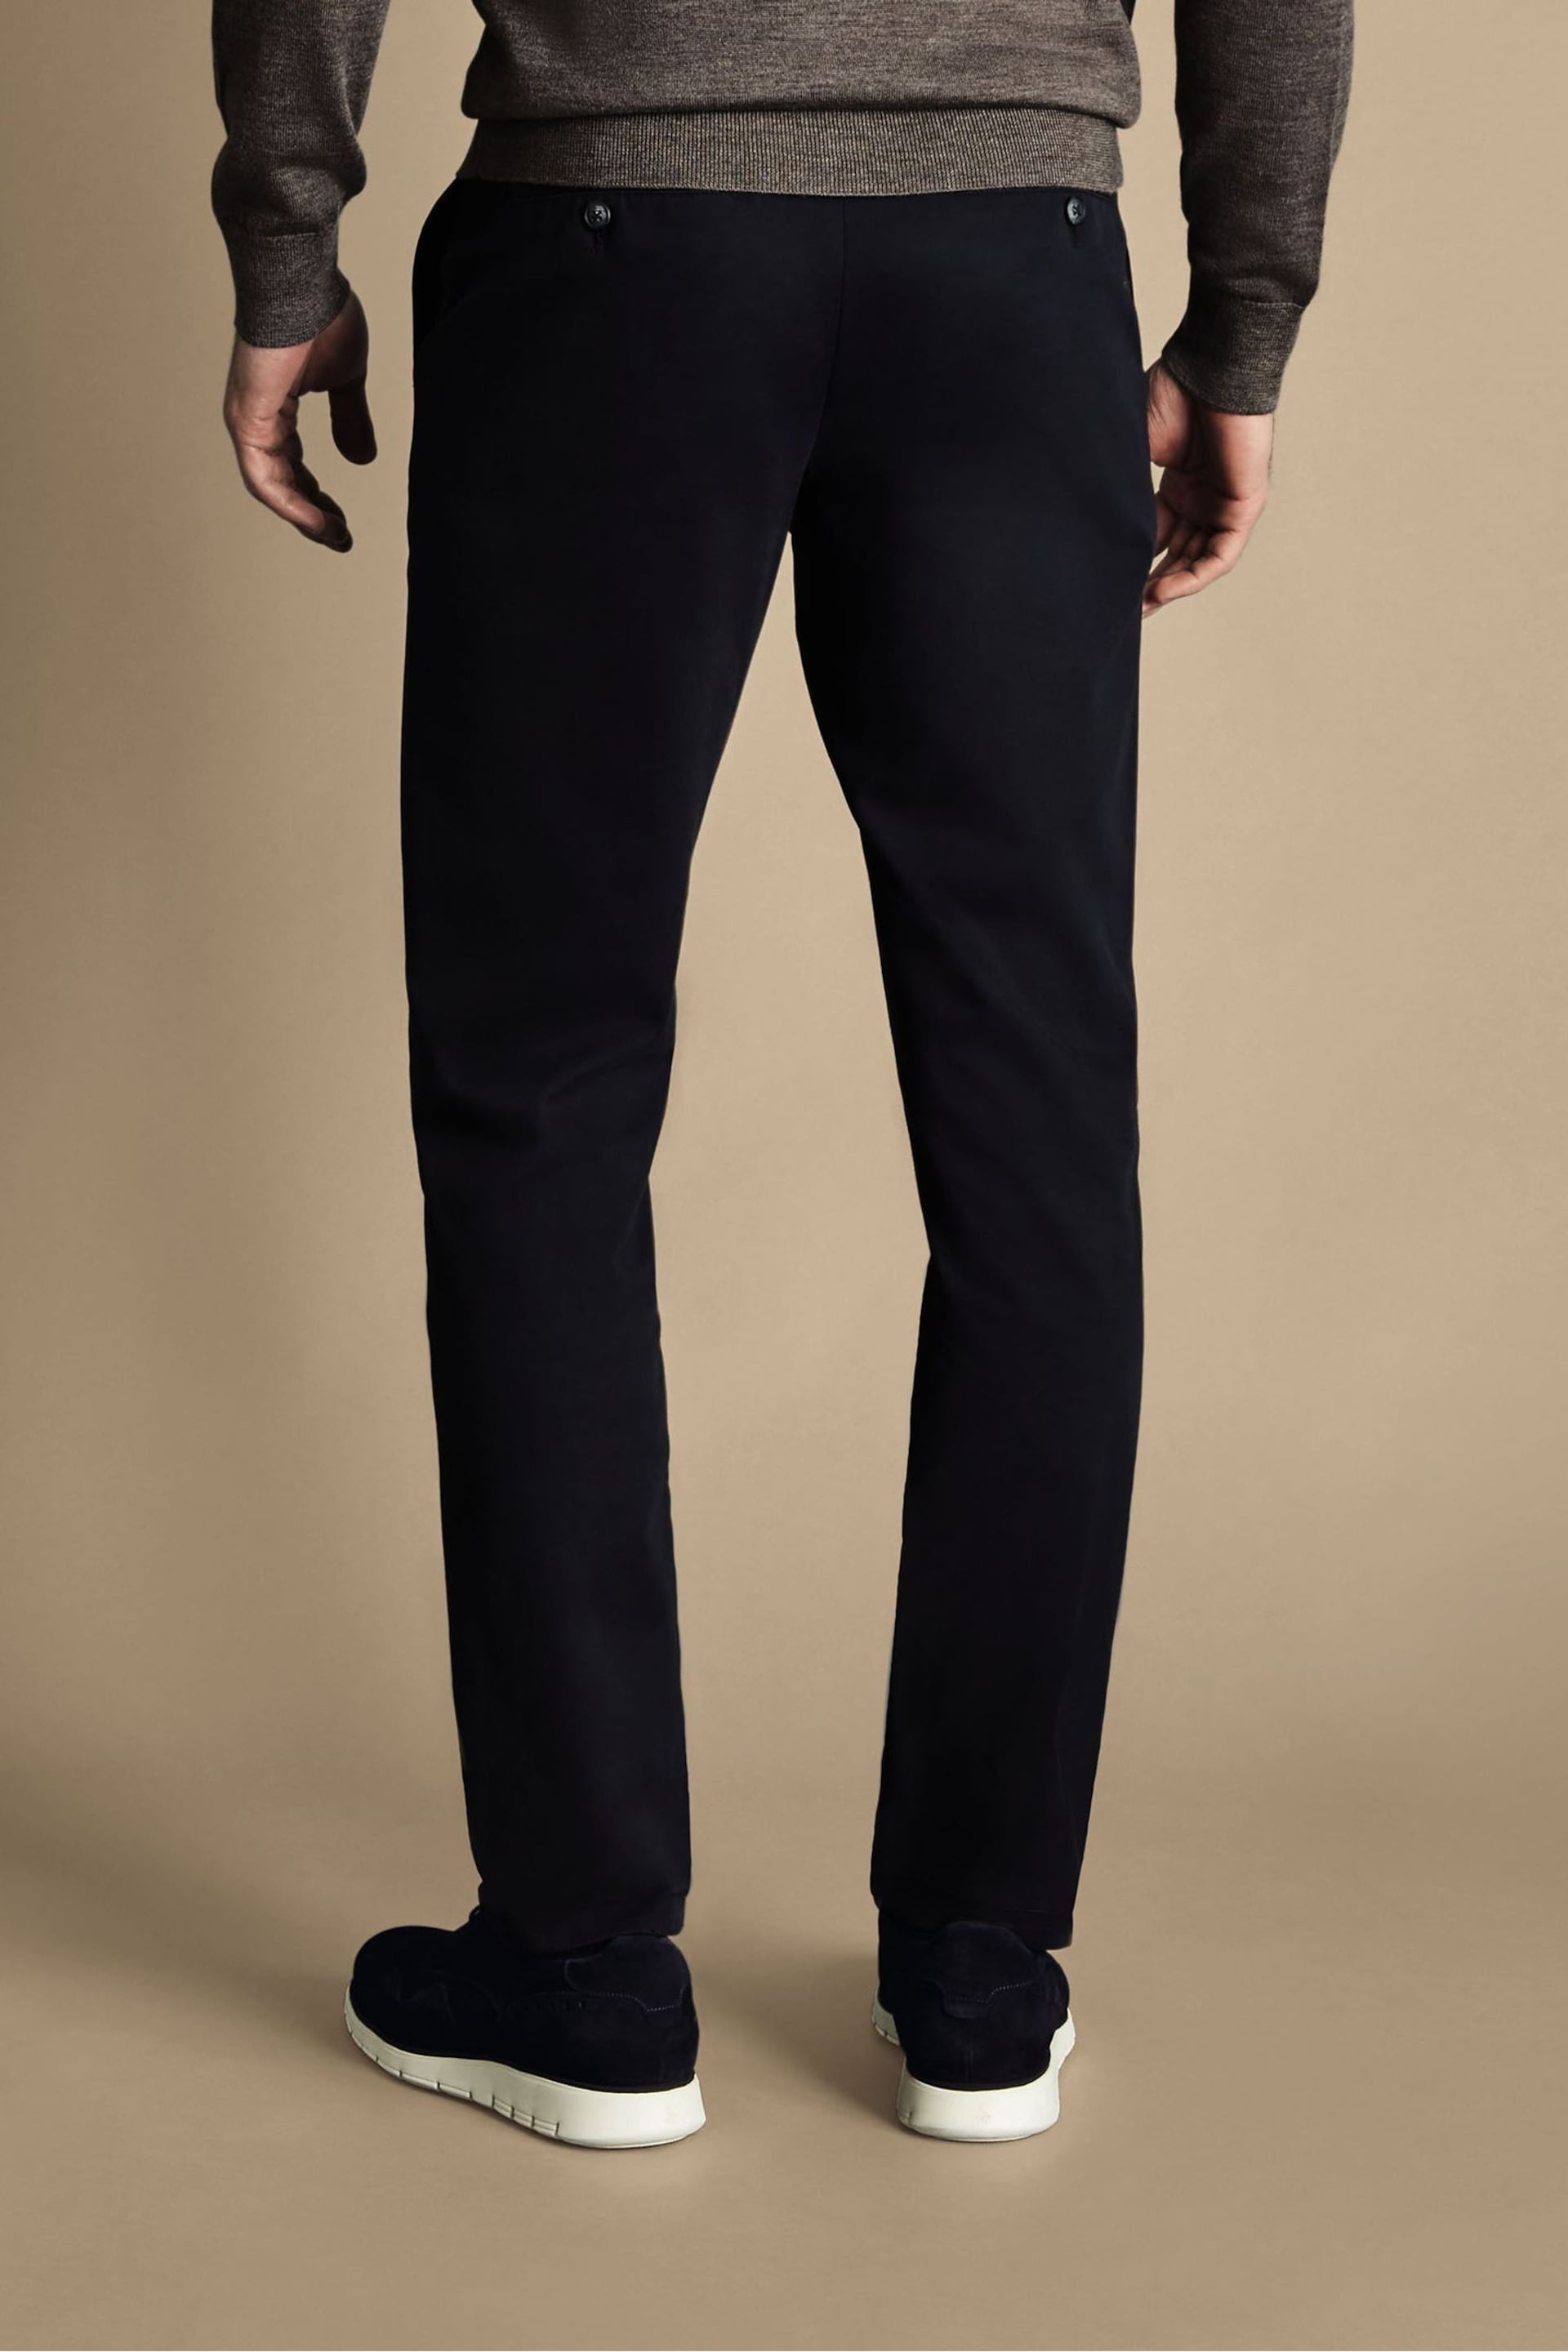 Charles Tyrwhitt Dark black Classic Fit Ultimate non-iron Chino Trousers - Image 2 of 5